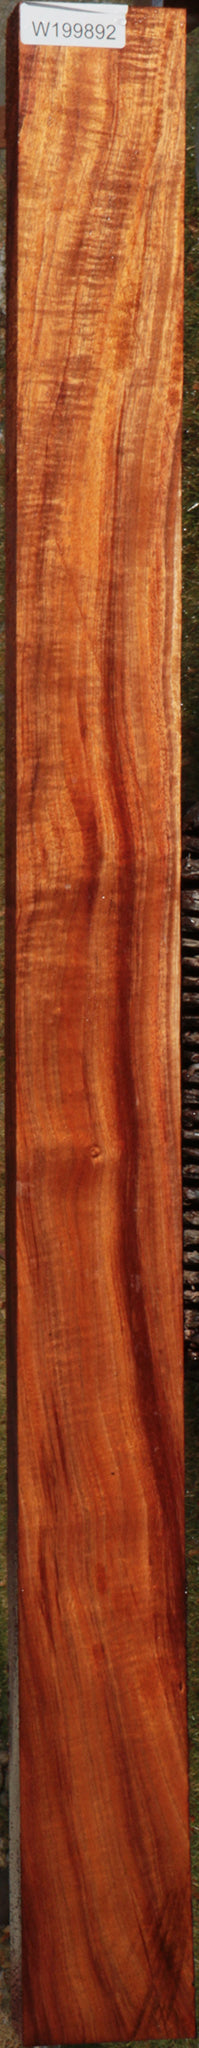 Hawaiian Koa Instrument Lumber